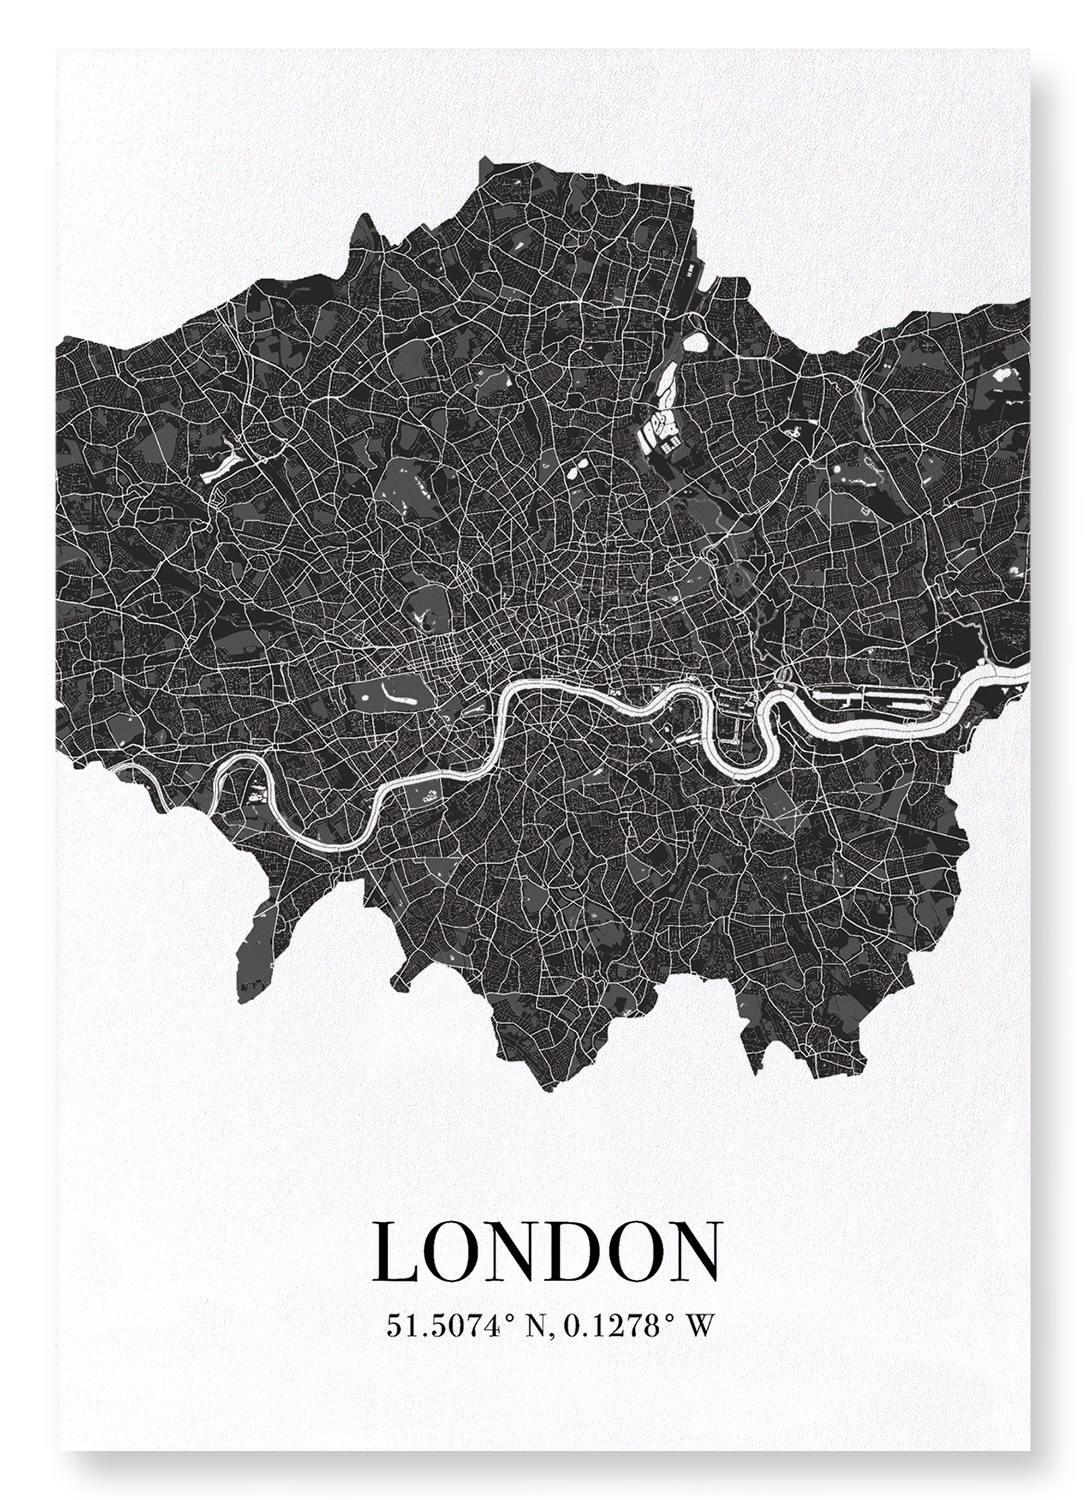 LONDON CUTOUT: Map Cutout Art Print